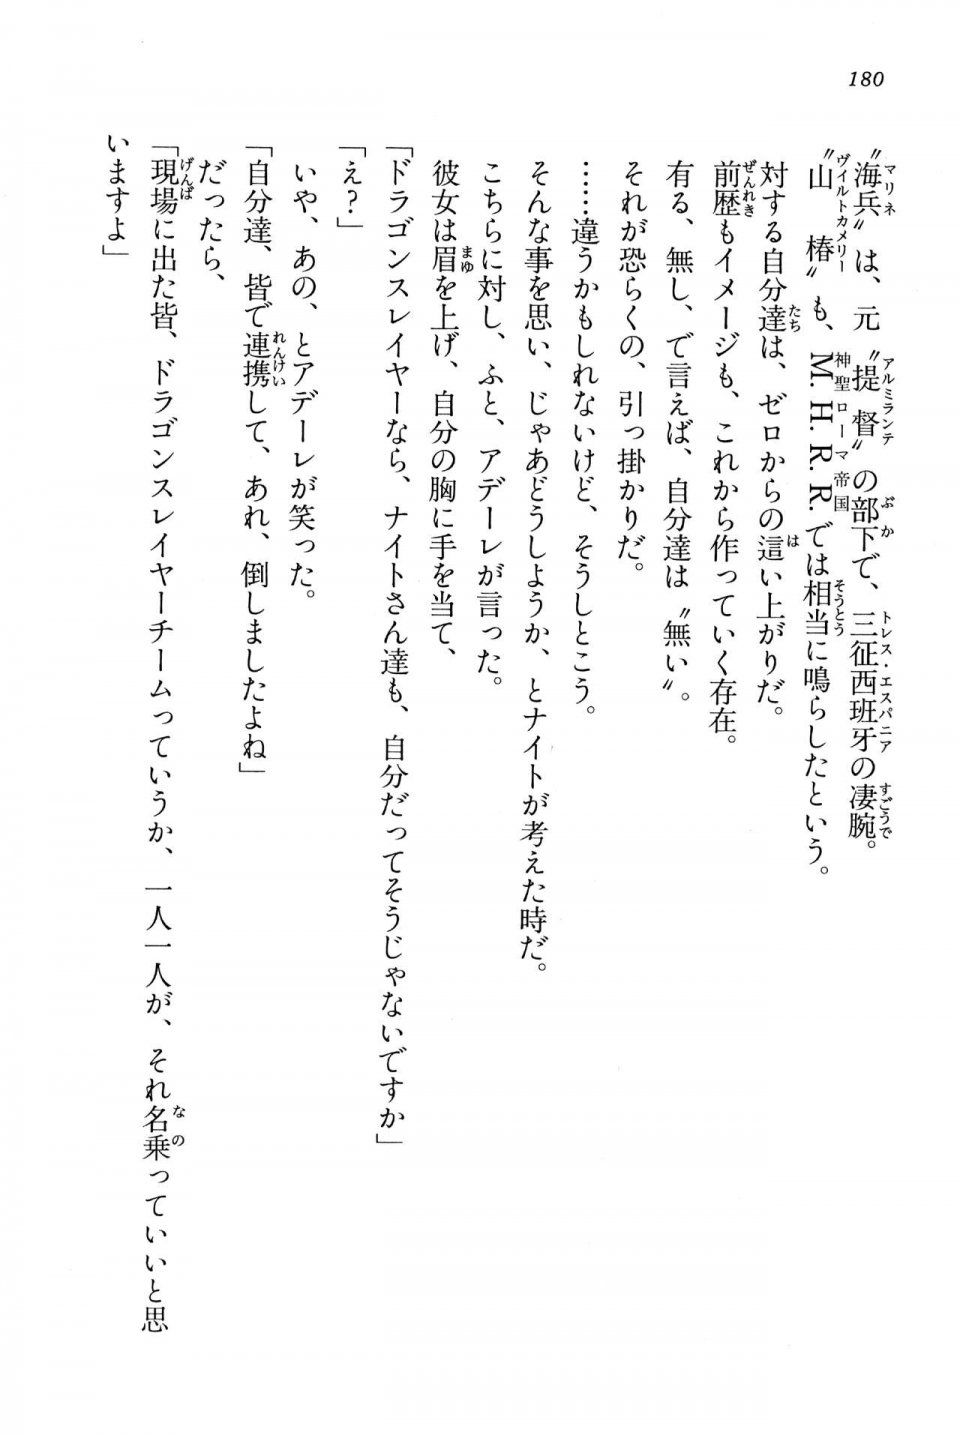 Kyoukai Senjou no Horizon BD Special Mininovel Vol 6(3B) - Photo #184